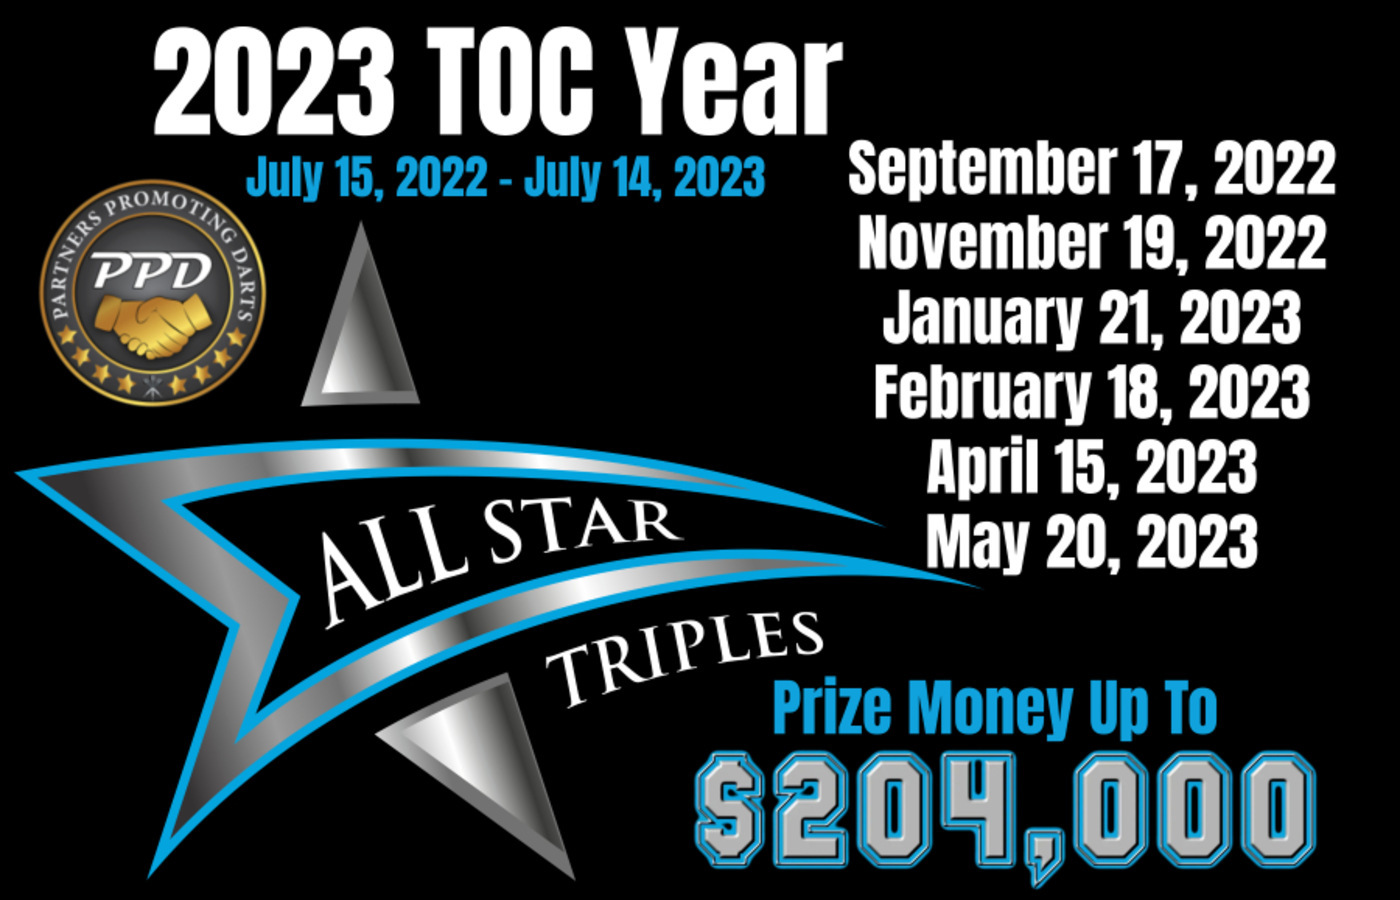 April 15, 2023 - All Star Triples Image